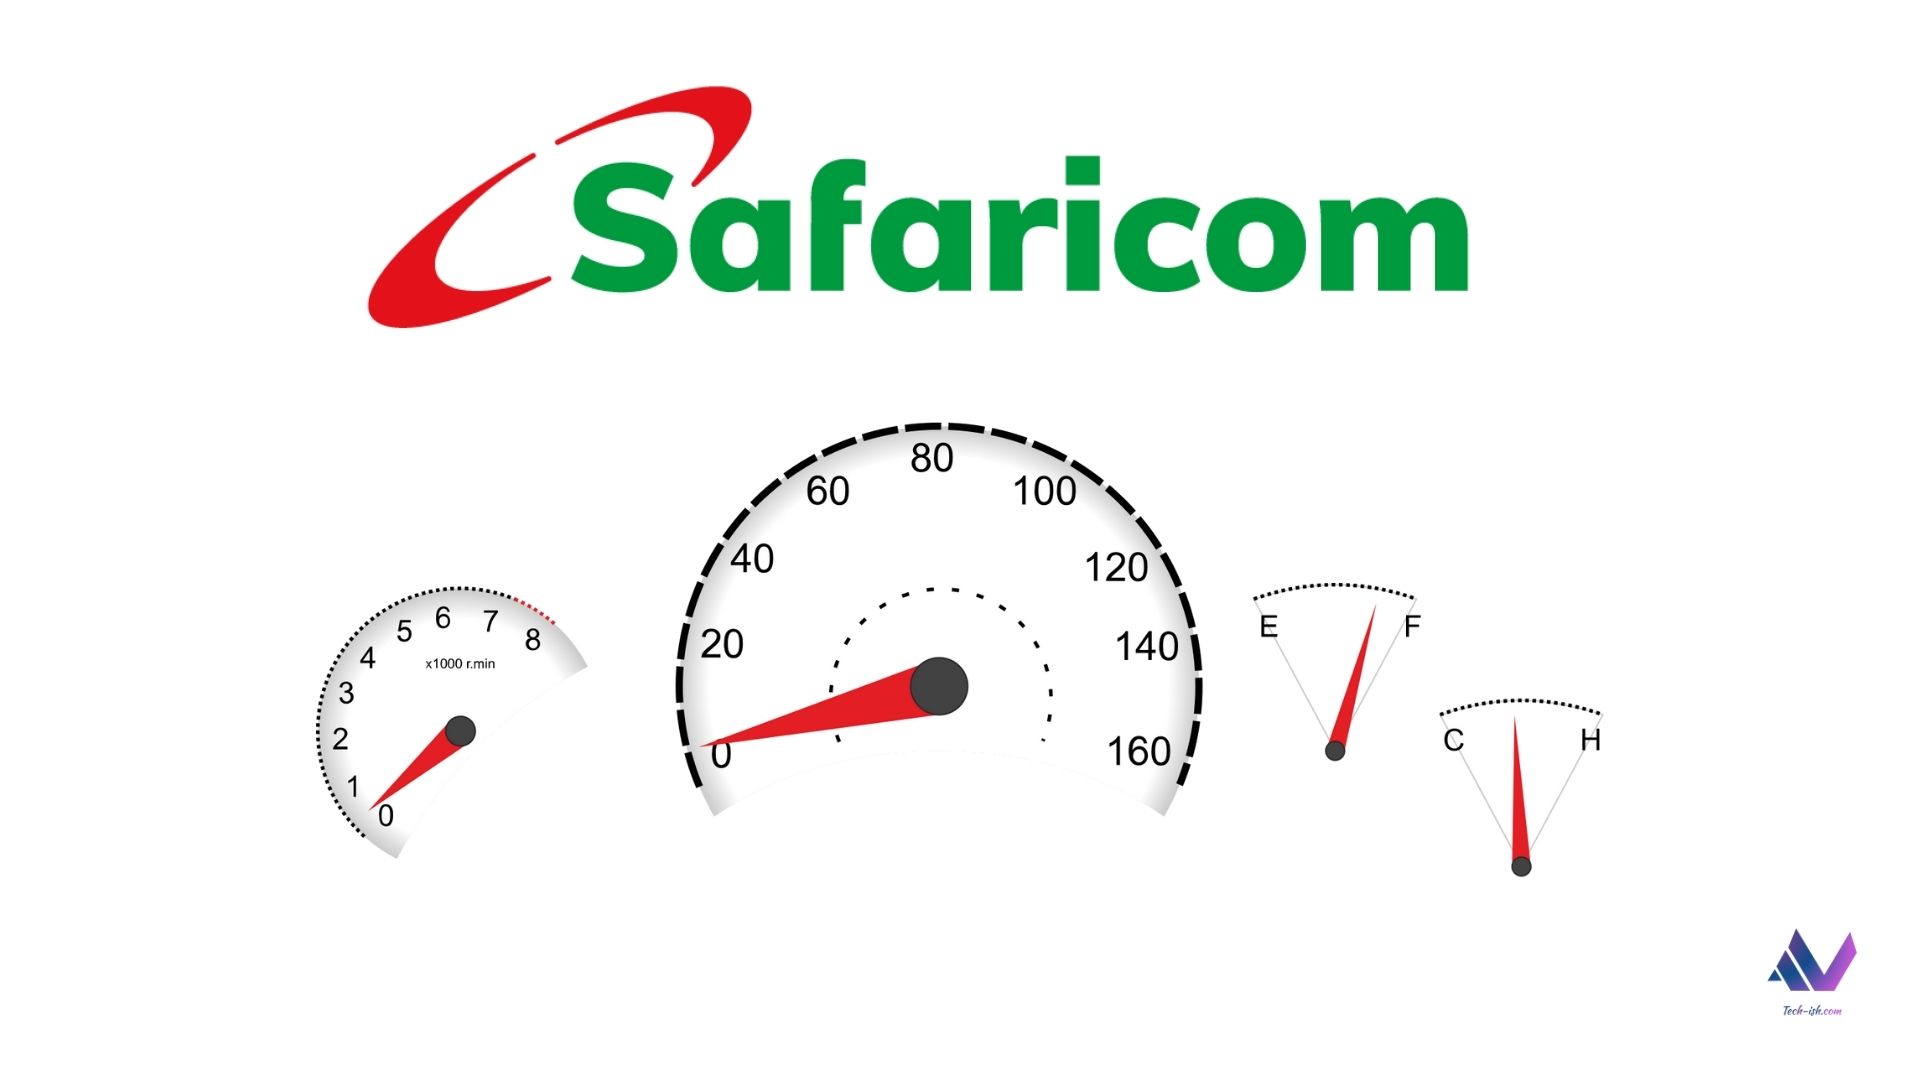 Safaricom working on Smart Vehicle Tracking System